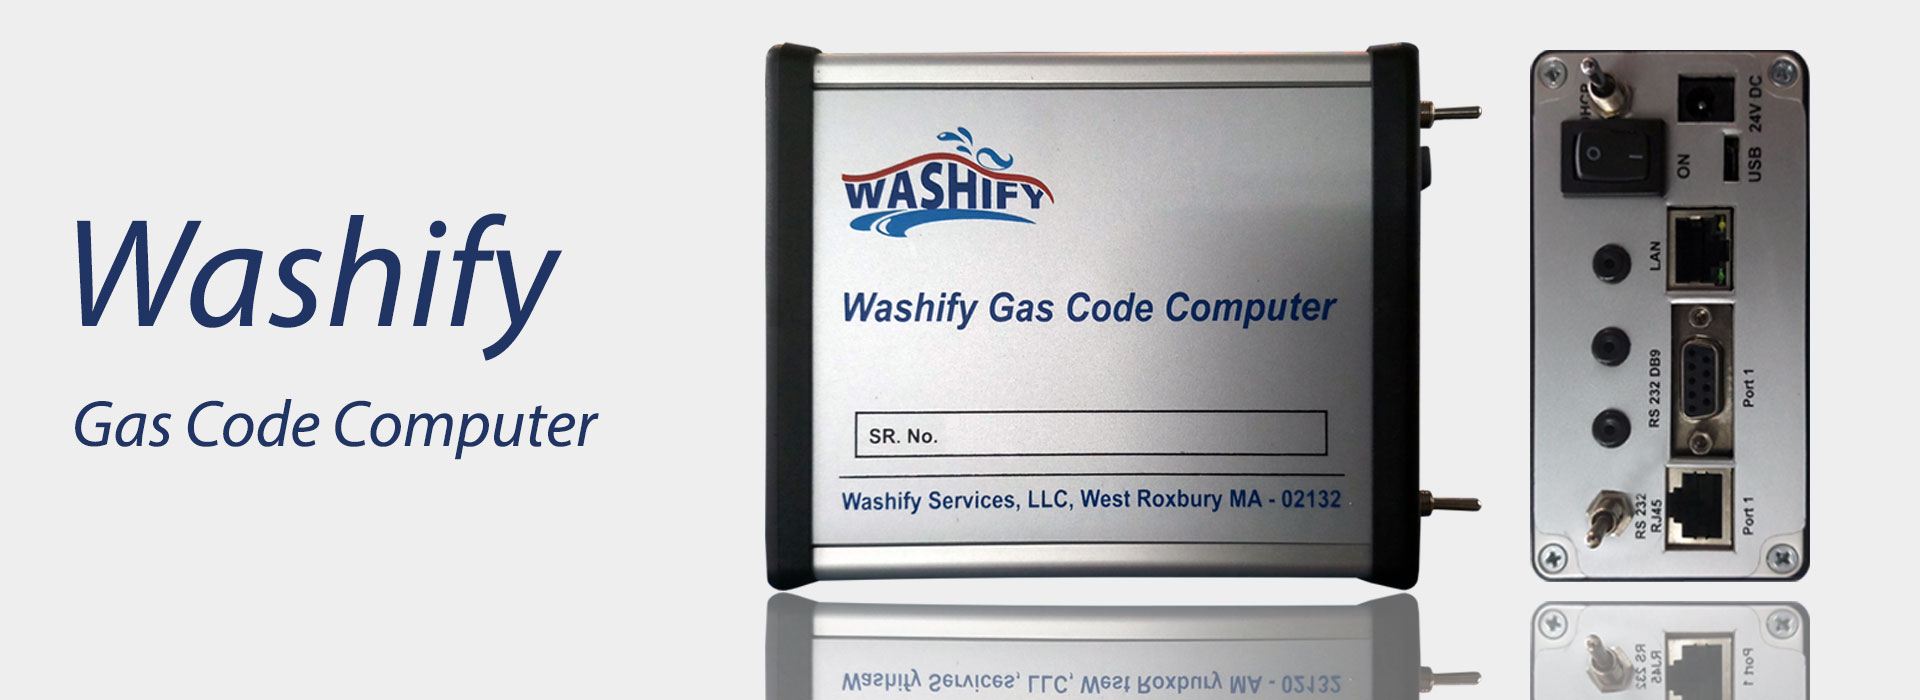 Washify Gas Code Computer